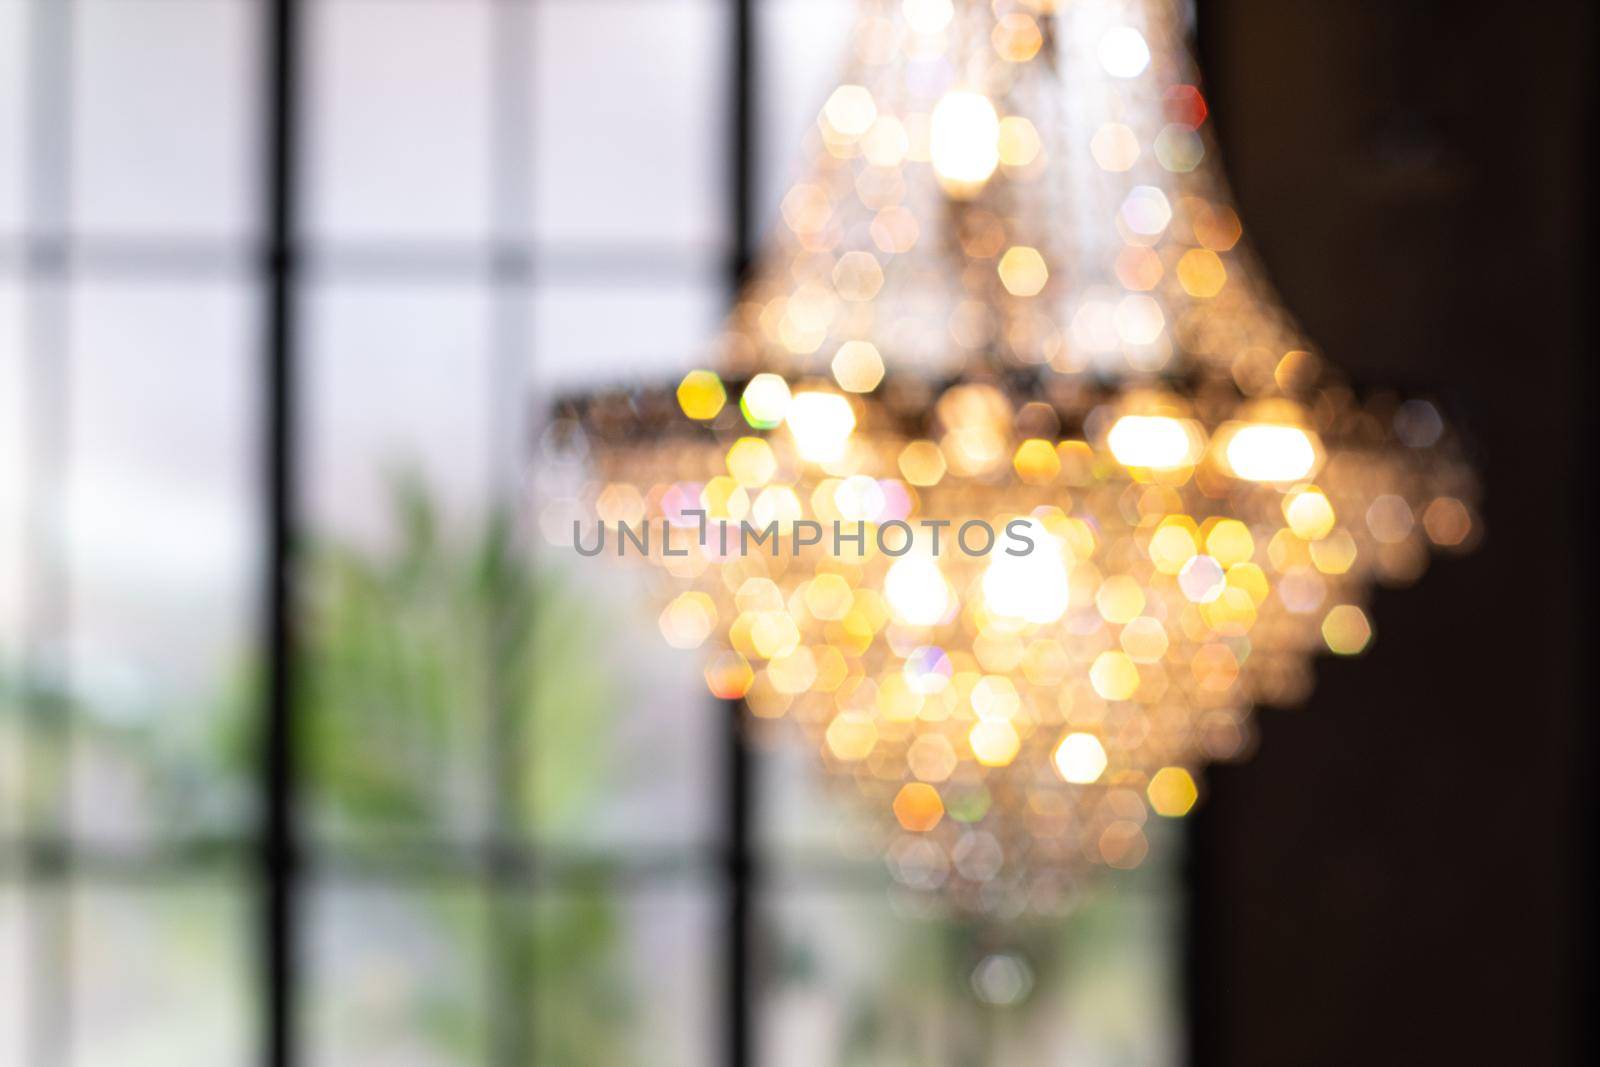 Abstract  blur chandelier with bokeh. Hanging Chandelier Lights Blurred Defocused Bokeh Background with blurred window on background by Petrichor